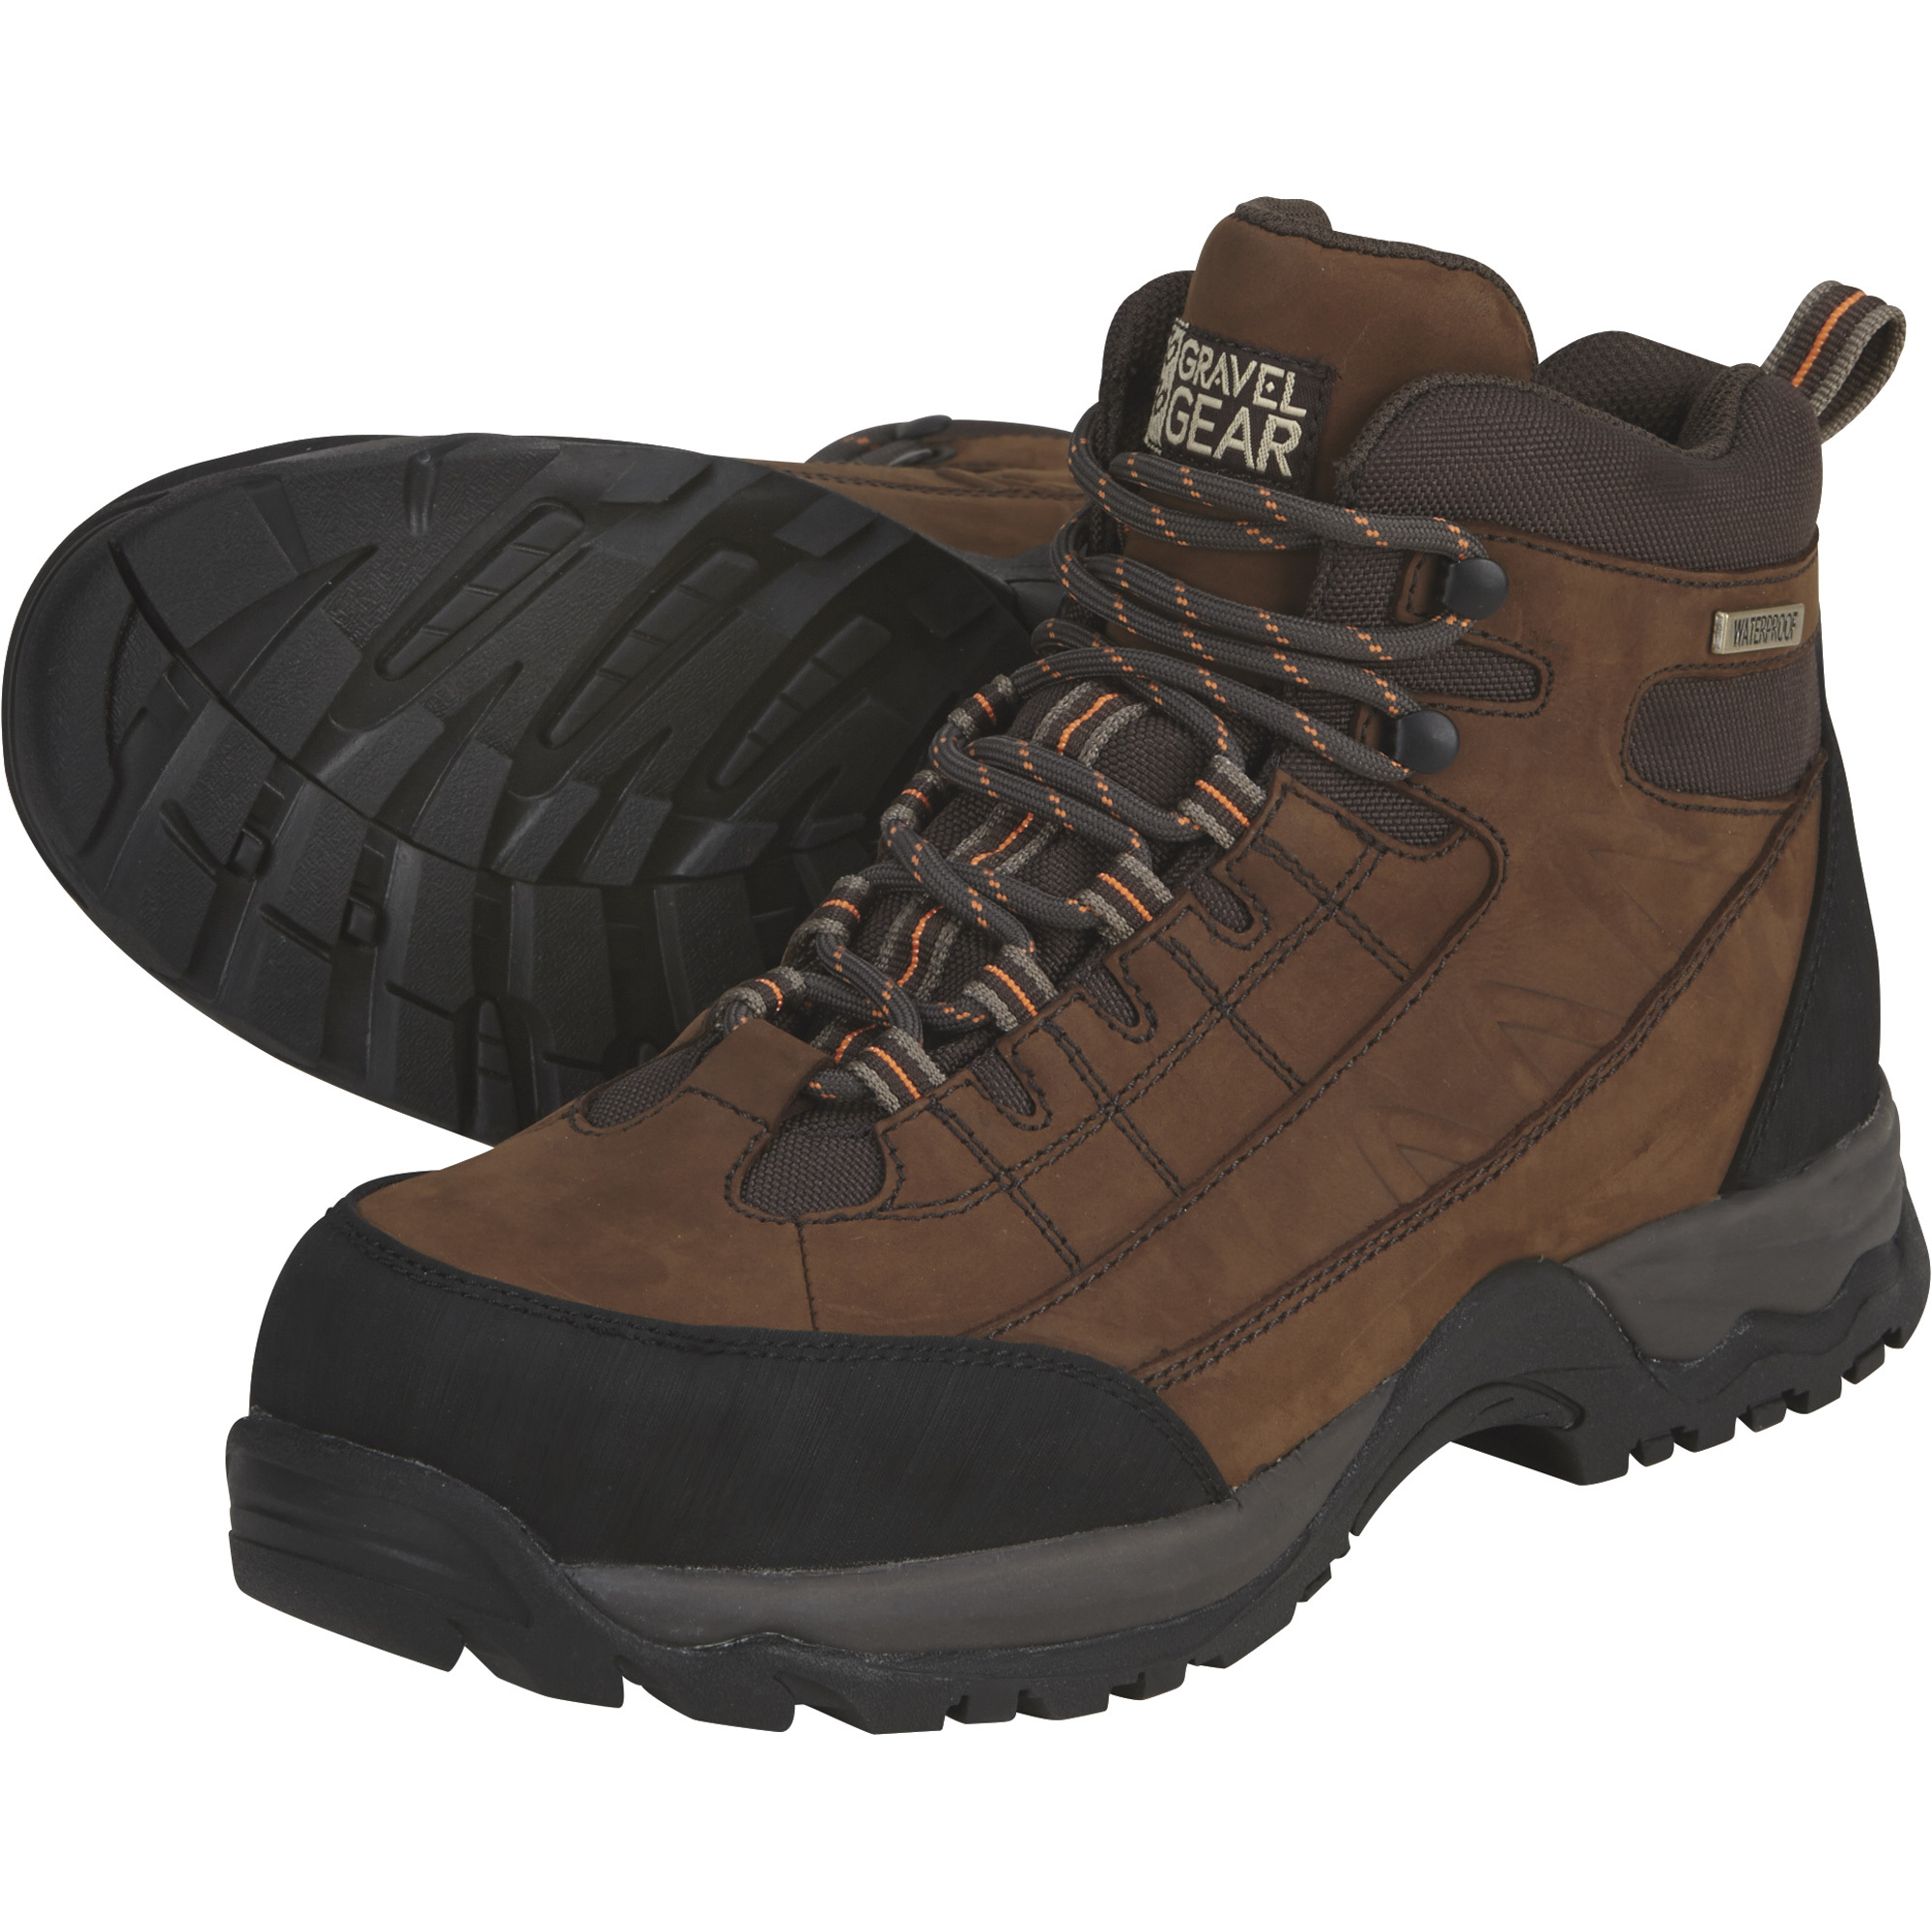 Gravel Gear Men's 6Inch Waterproof Nubuck Hikers - Brown, Size 8 1/2